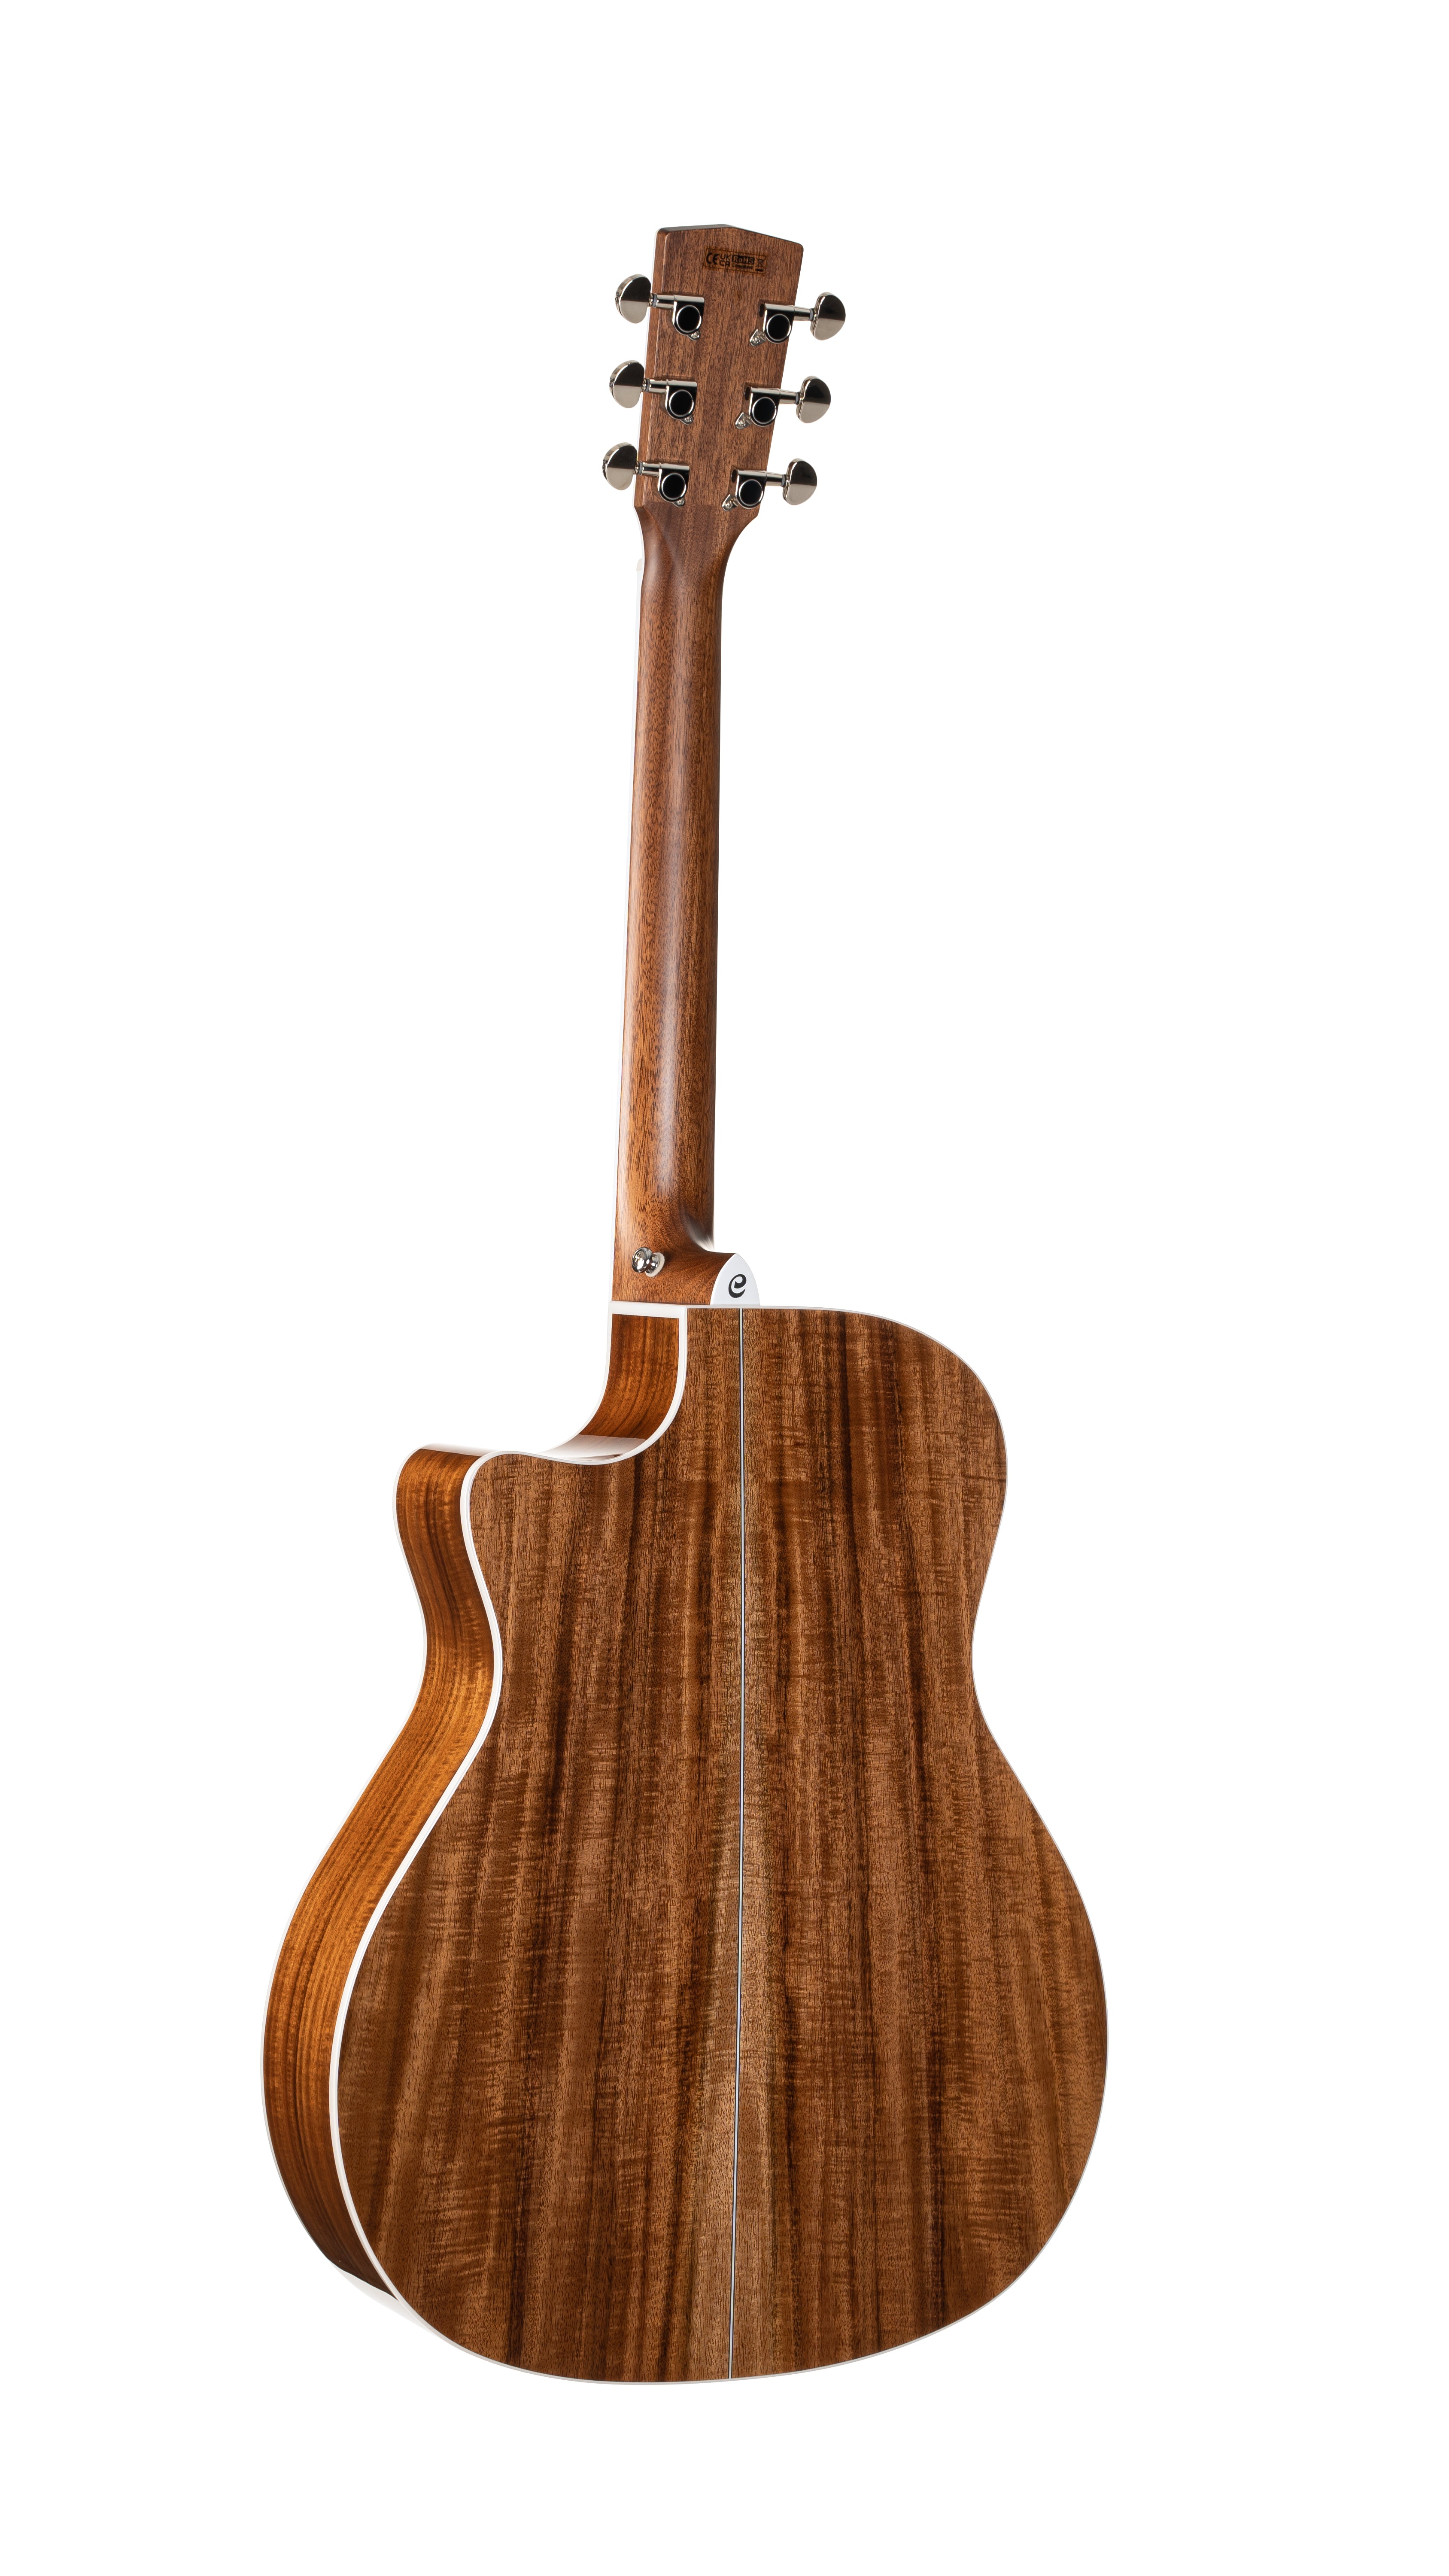 Cort Grand Regal Acoustic GA5F Koa Natural, Electro Acoustic Guitar for sale at Richards Guitars.